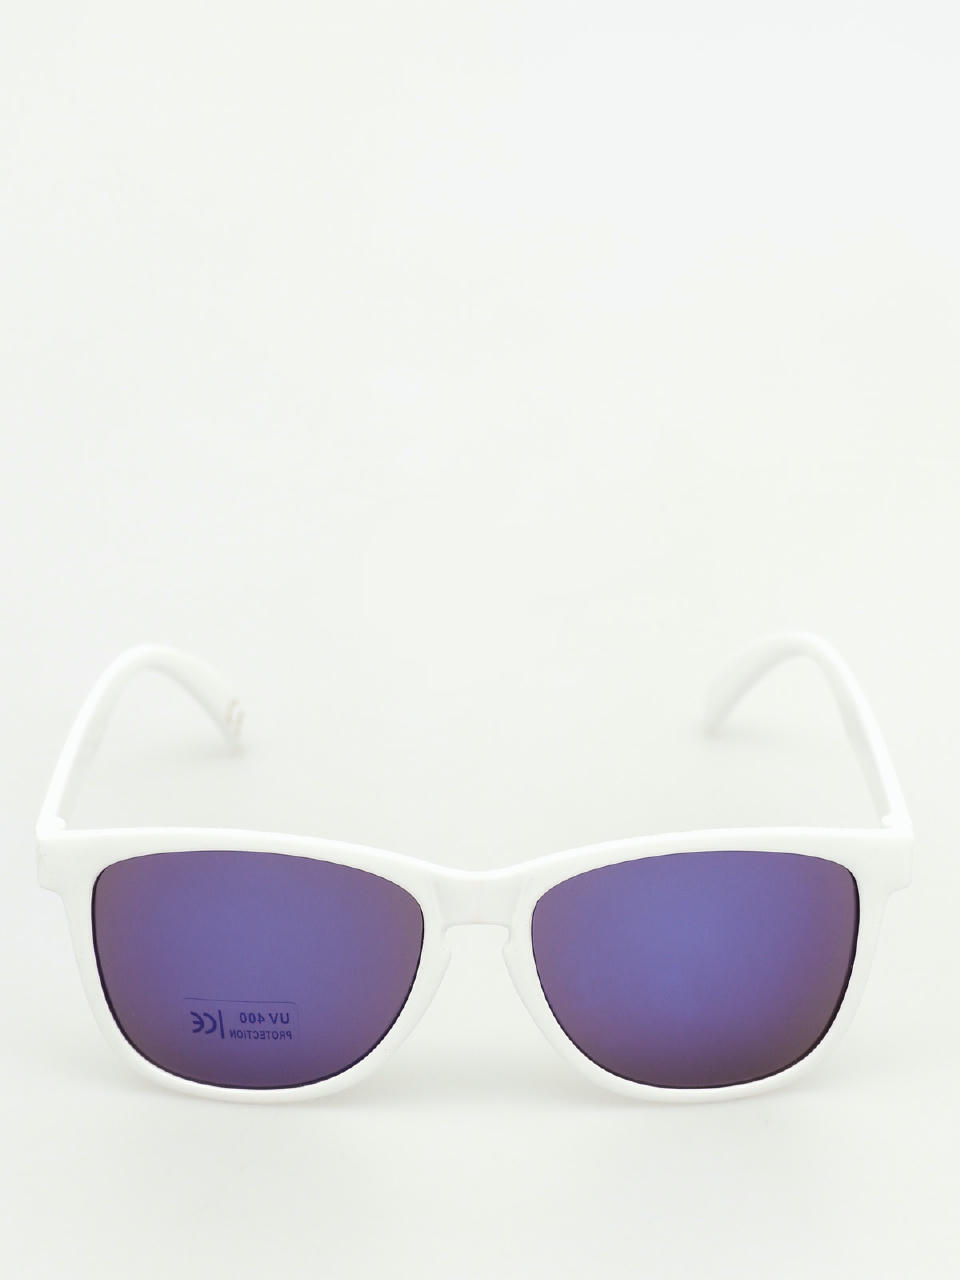 Vans Henderson II Sunglasses (true blue/silver)